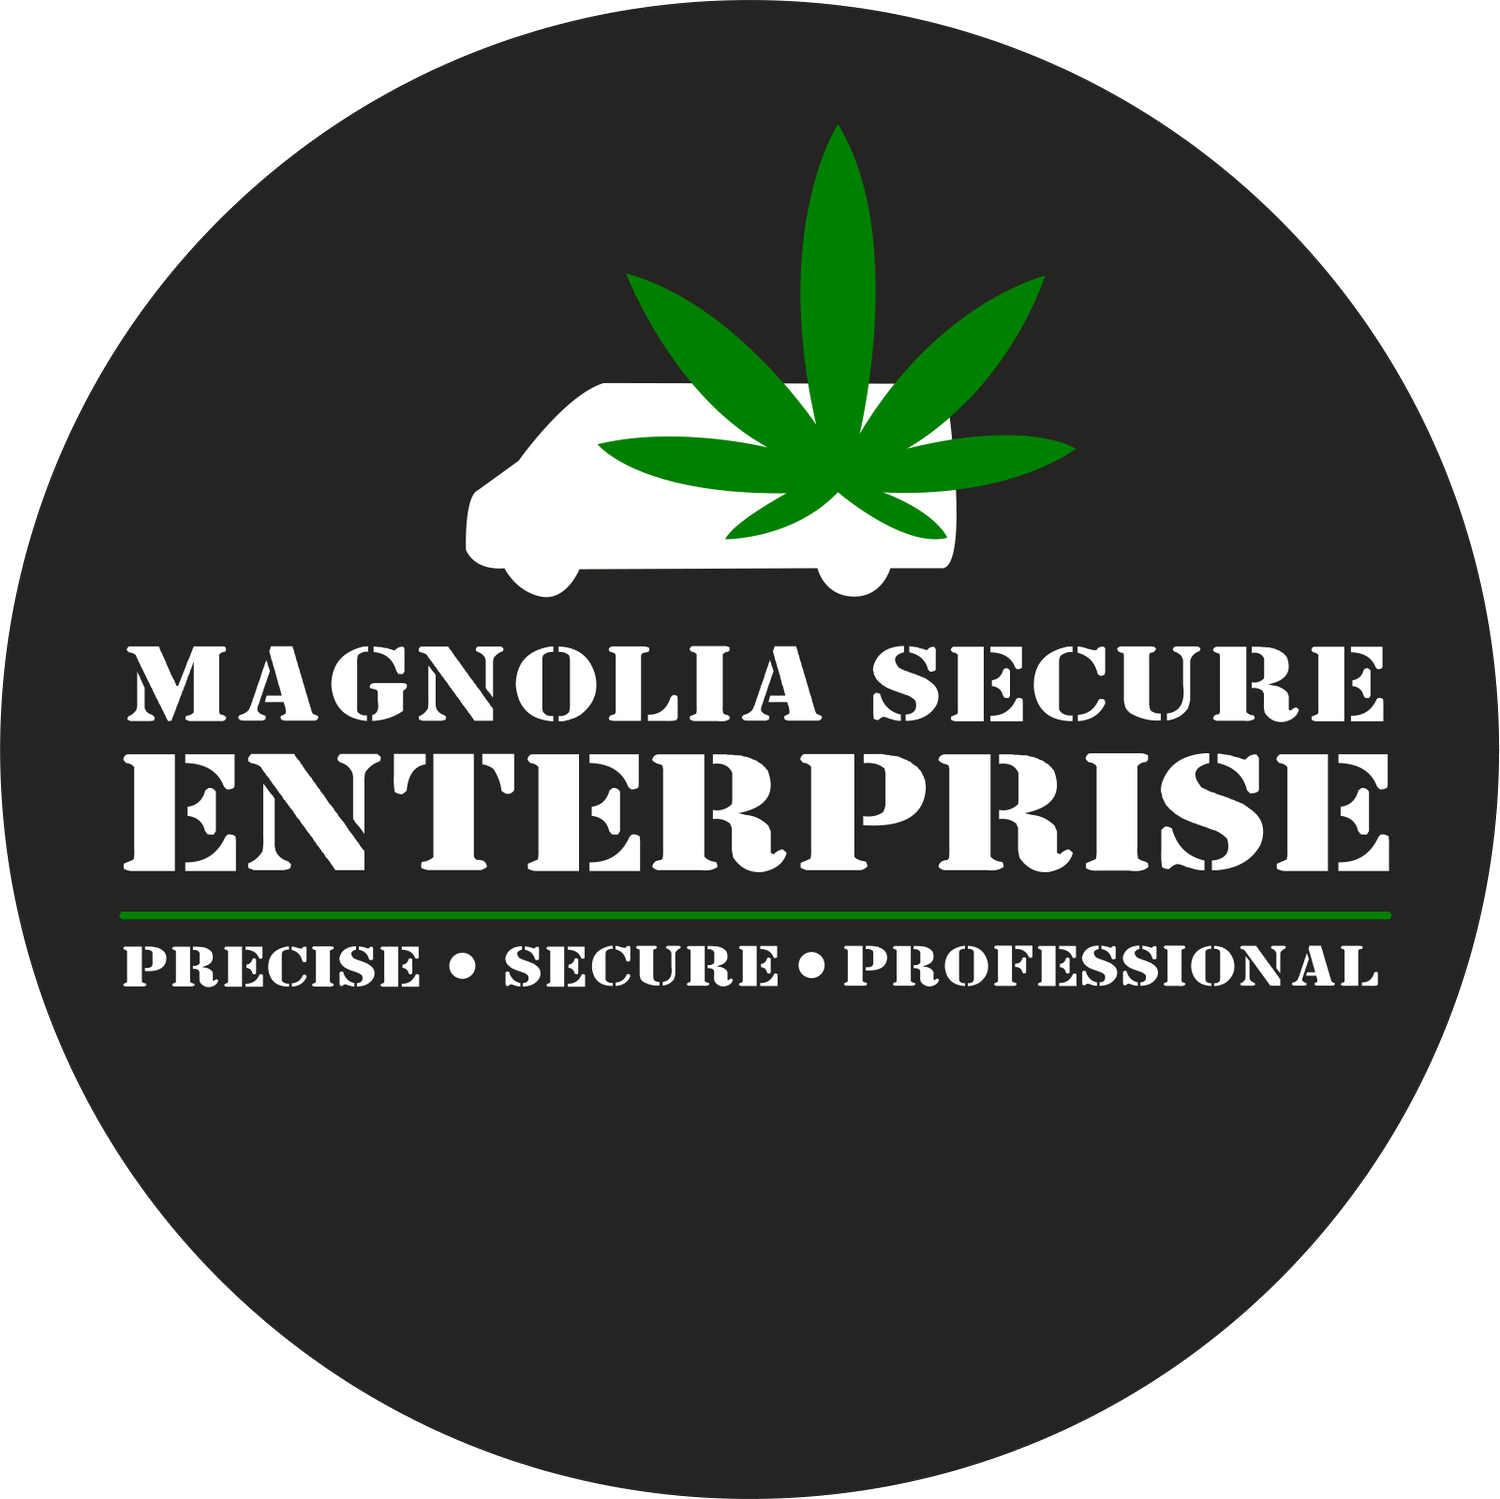 Magnolia Secure Enterprise